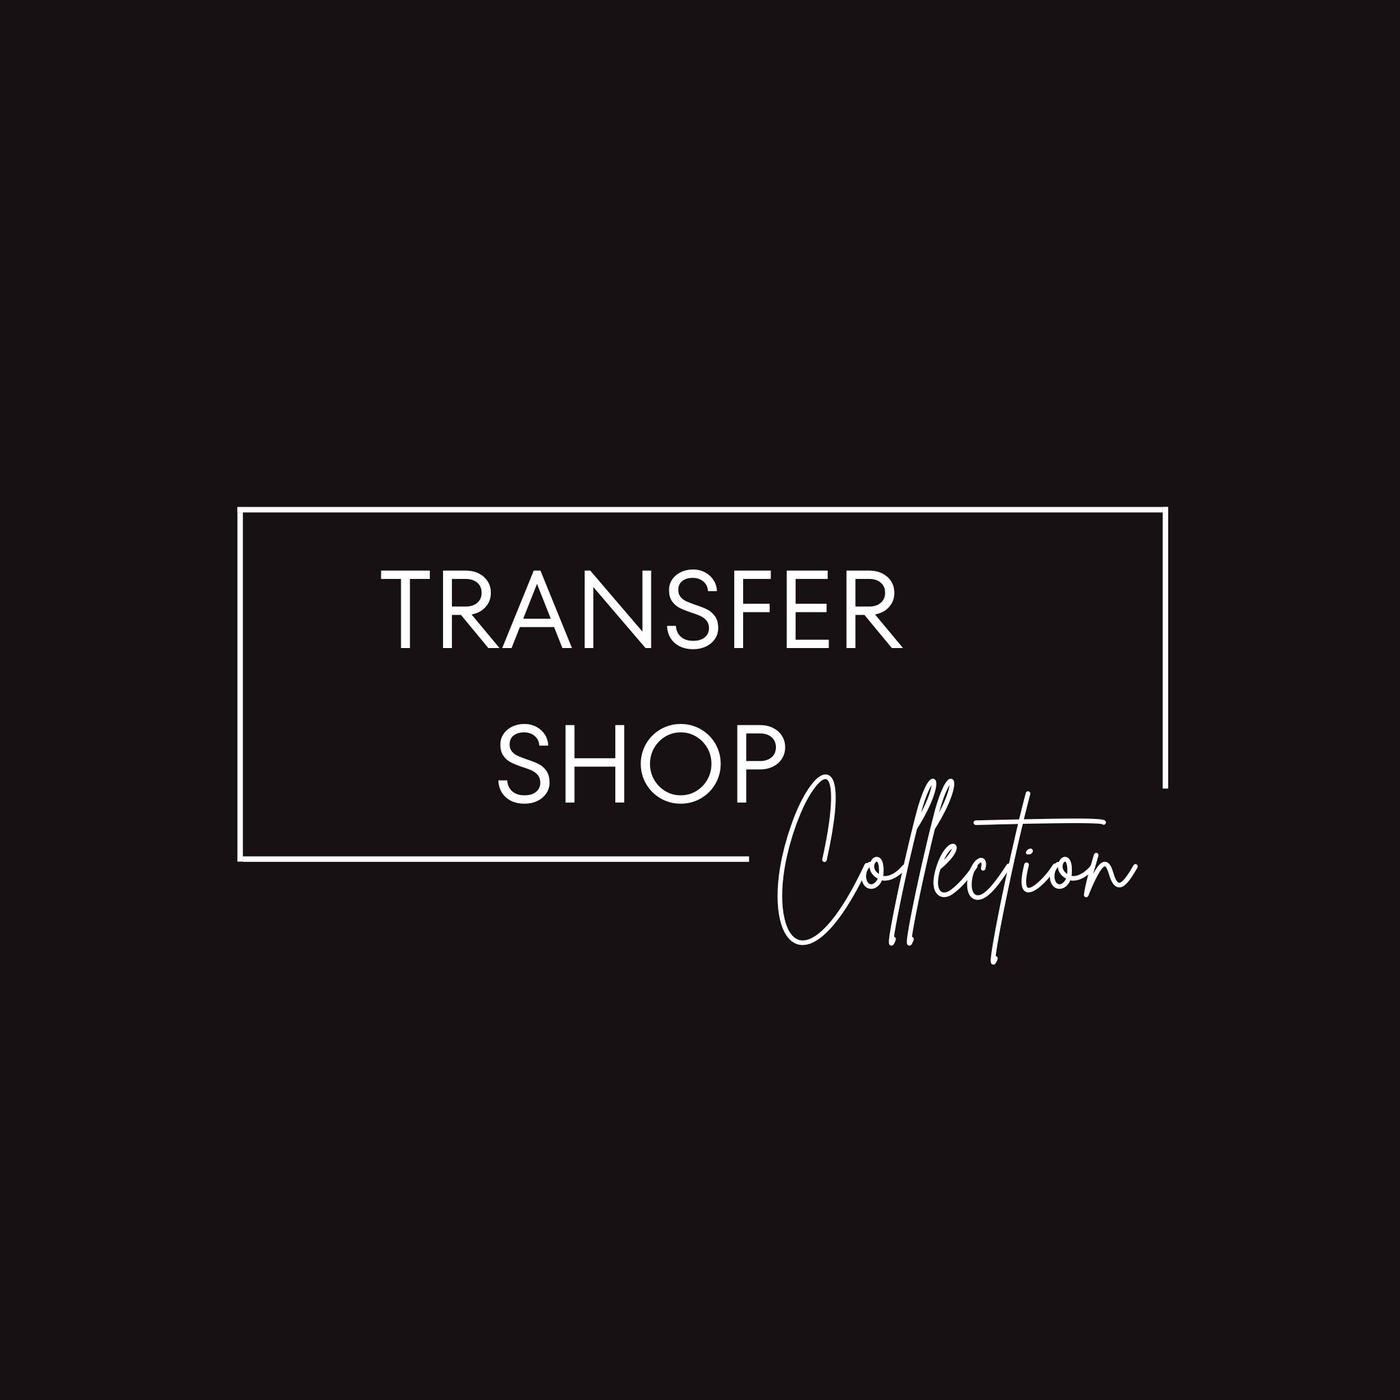 Transfer Shop